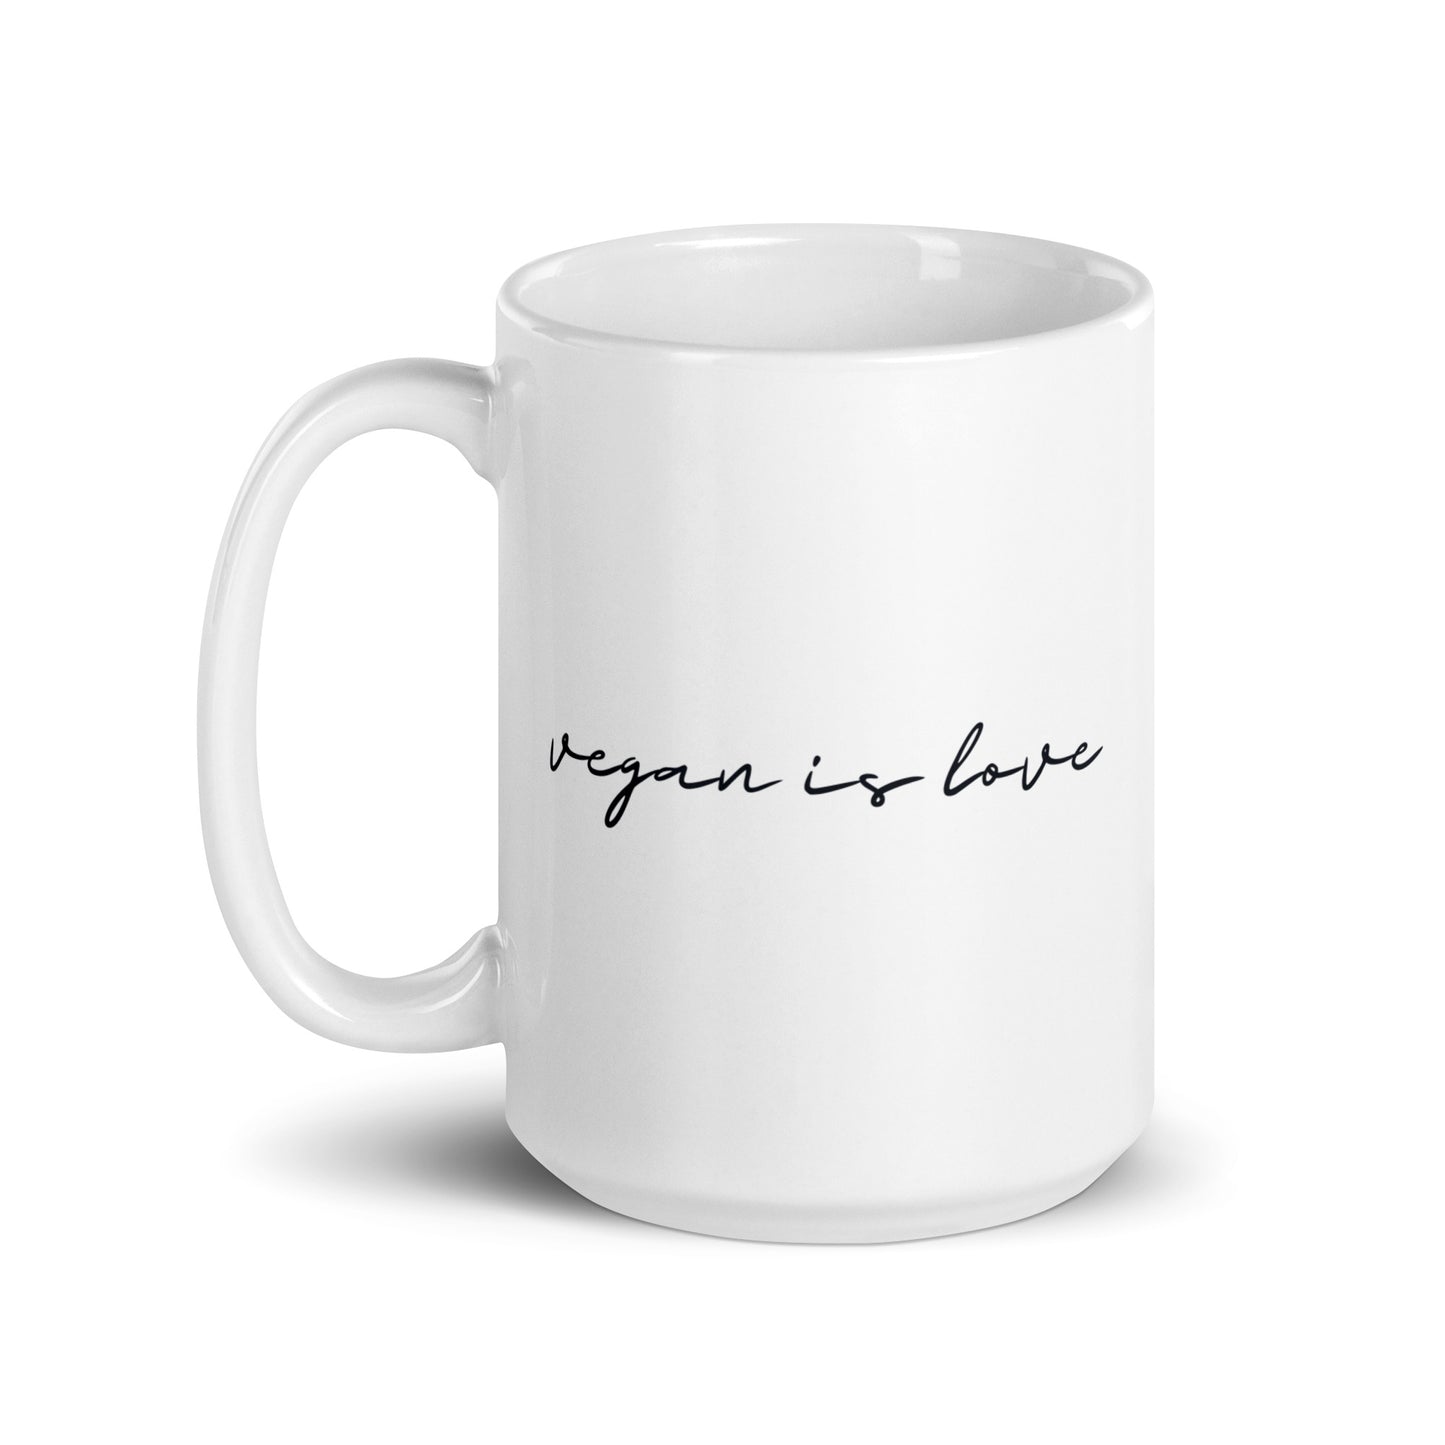 Vegan Is Love - Vegan Coffee Mug